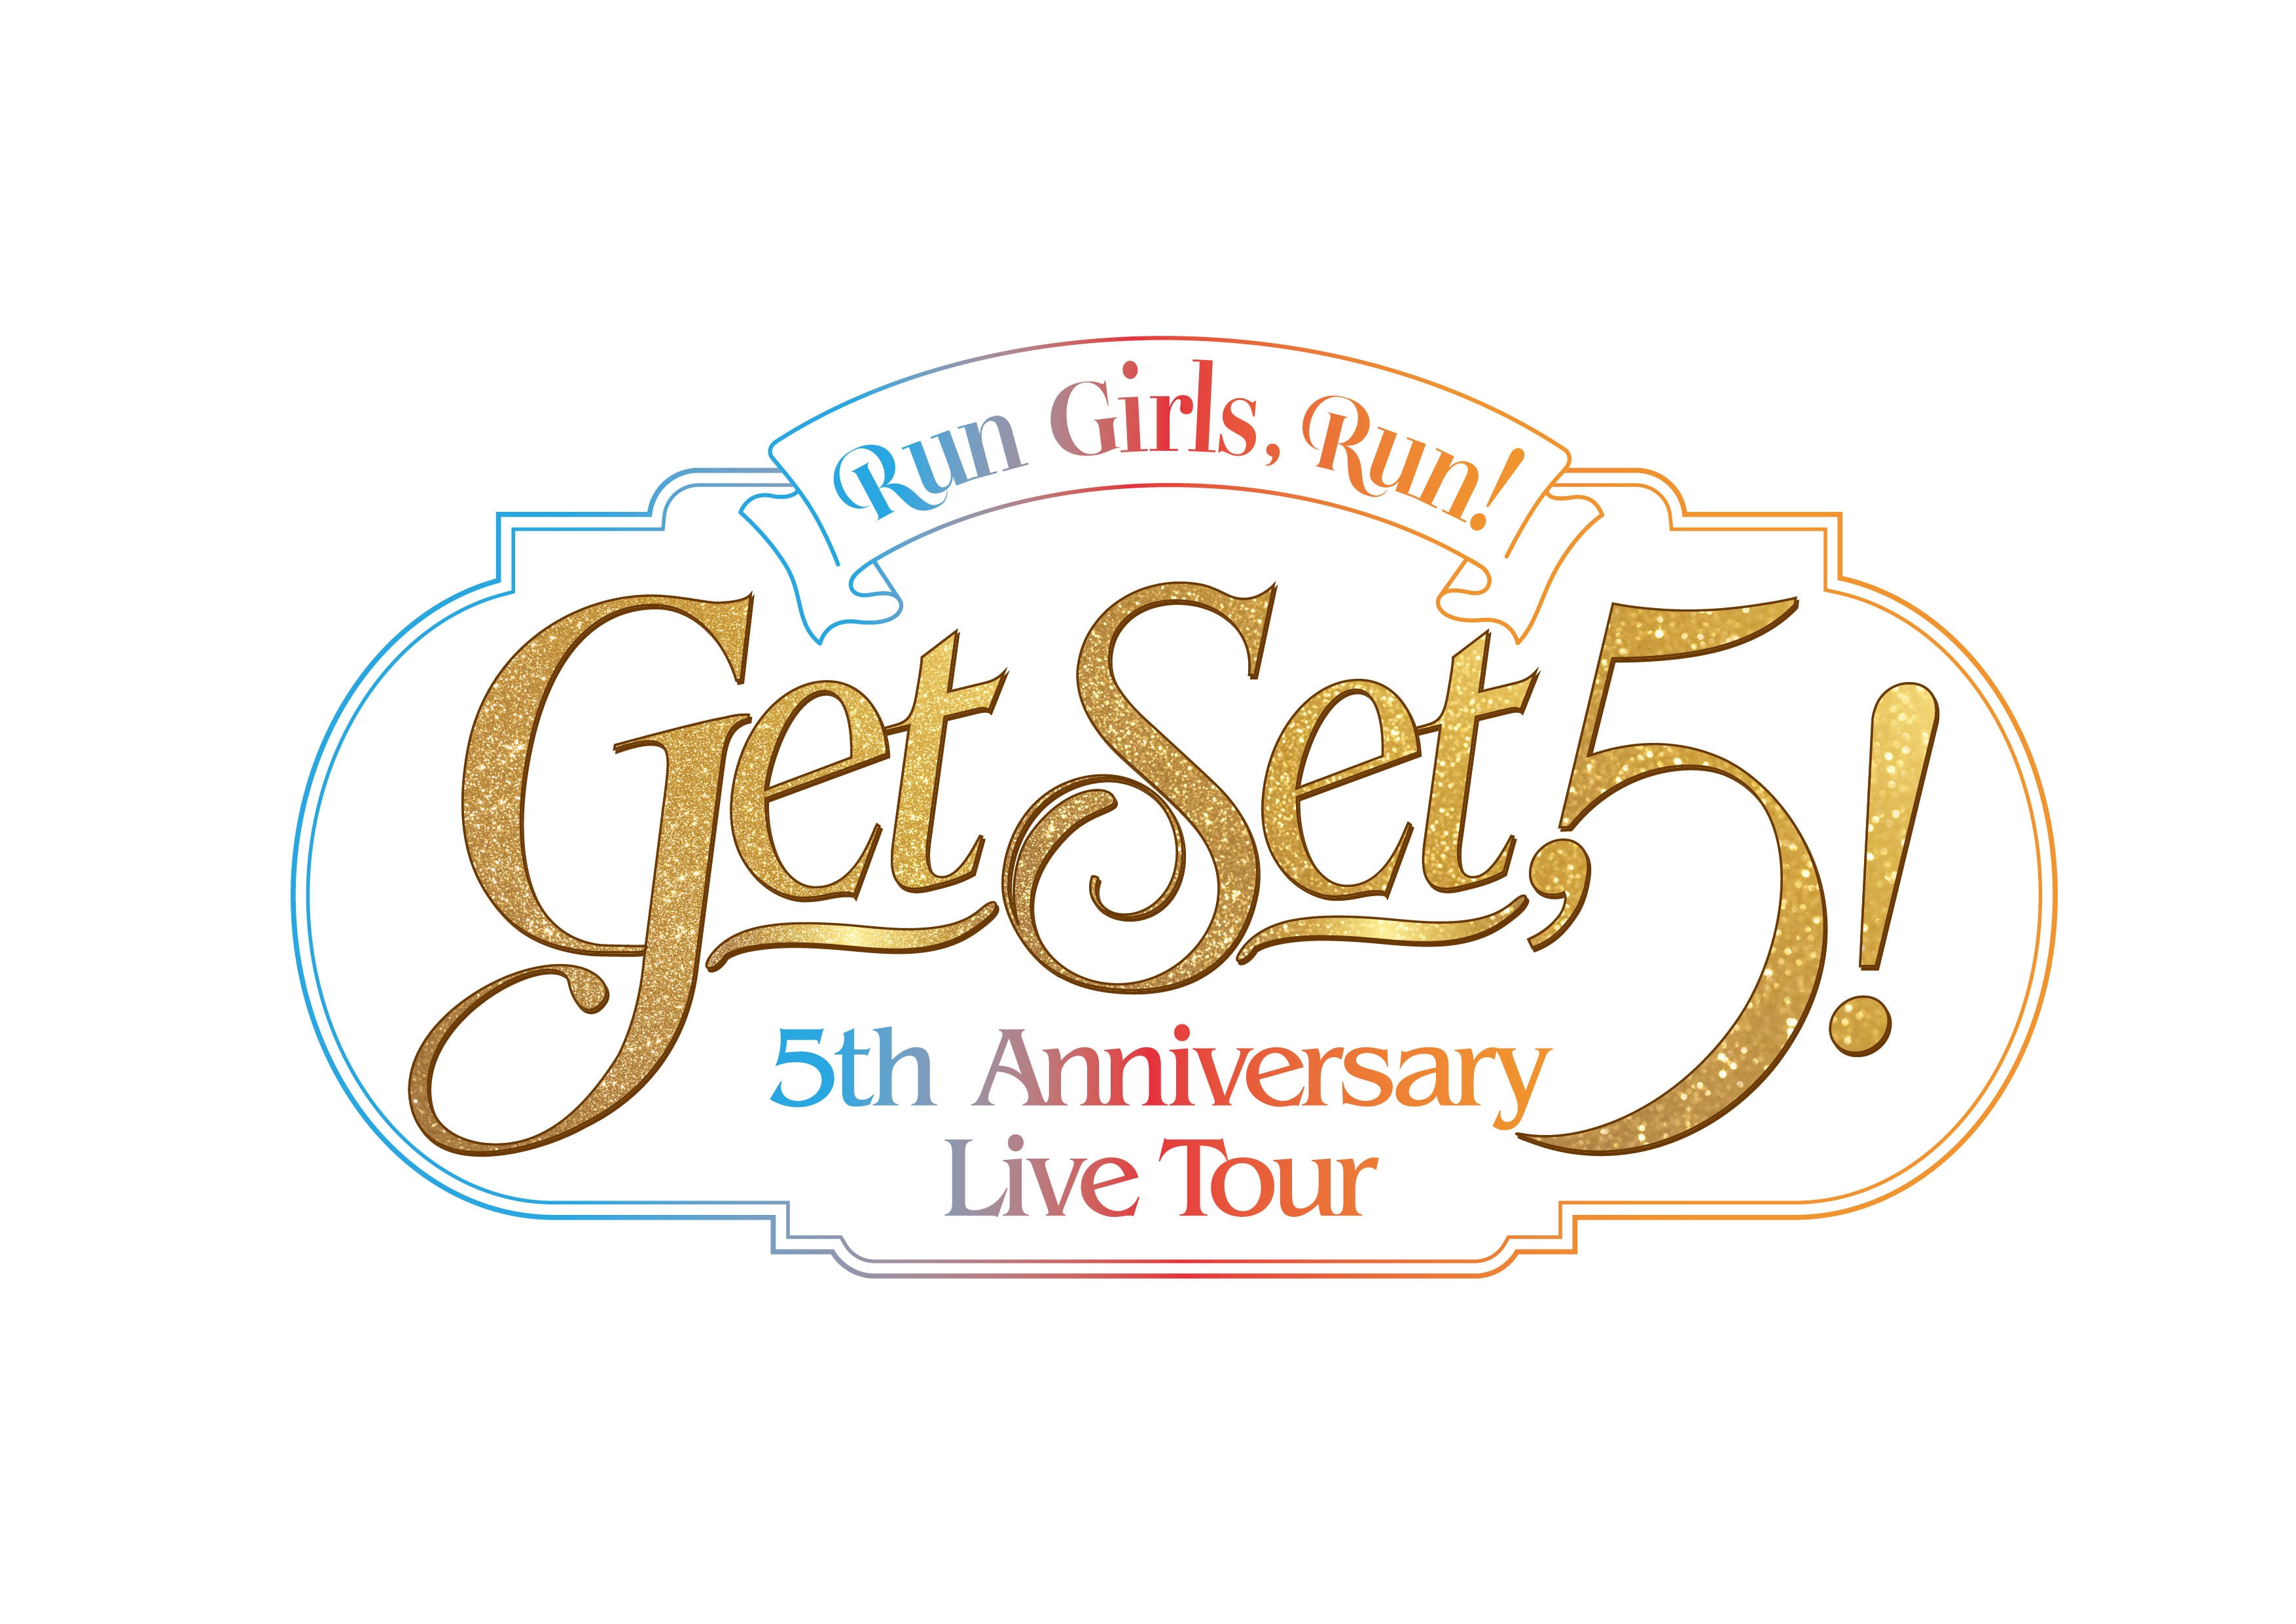 『Run Girls, Run！5th Anniversary Live Tour Get Set, 5！』<br />
東京公演一般発売のご案内